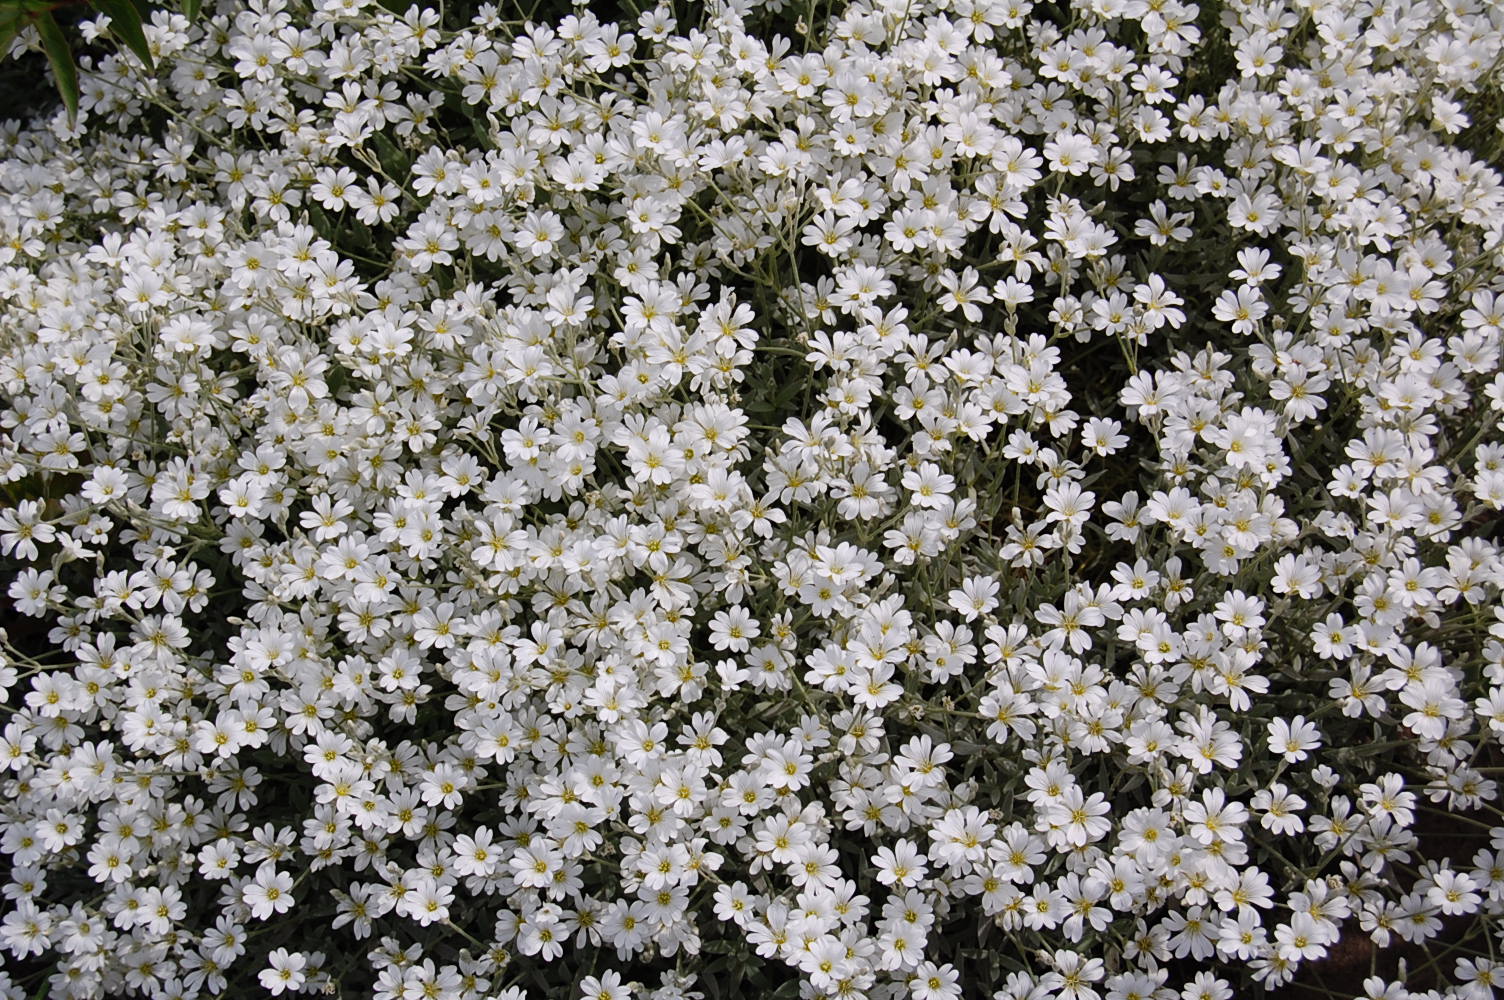 White Flowers Tumblr 17 Widescreen Wallpaper ...
